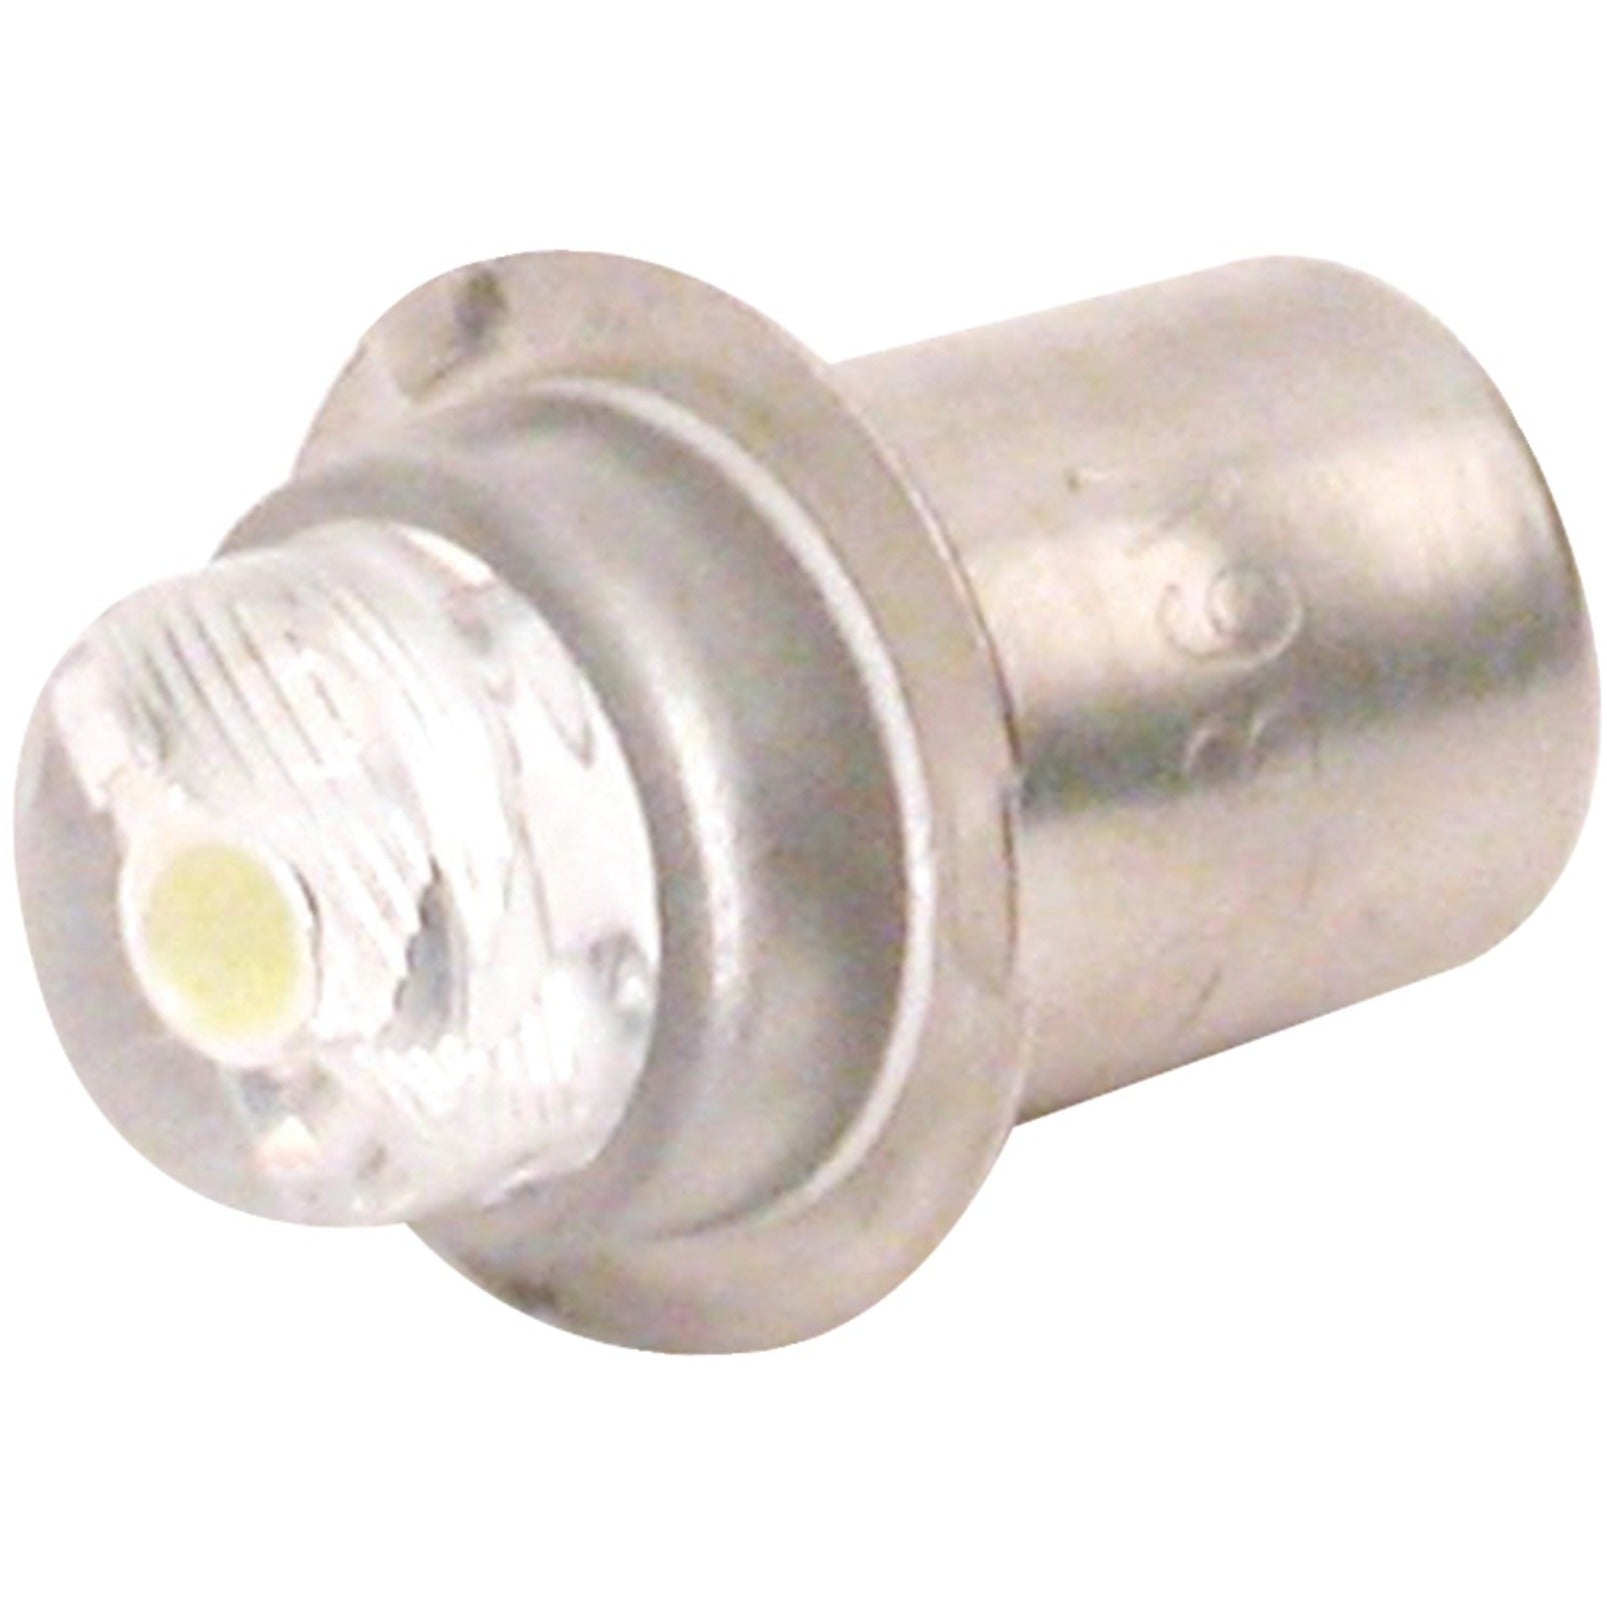 Dorcy 41-1644 LED Replacement Light Bulb, 6V DC - 100000 Hour